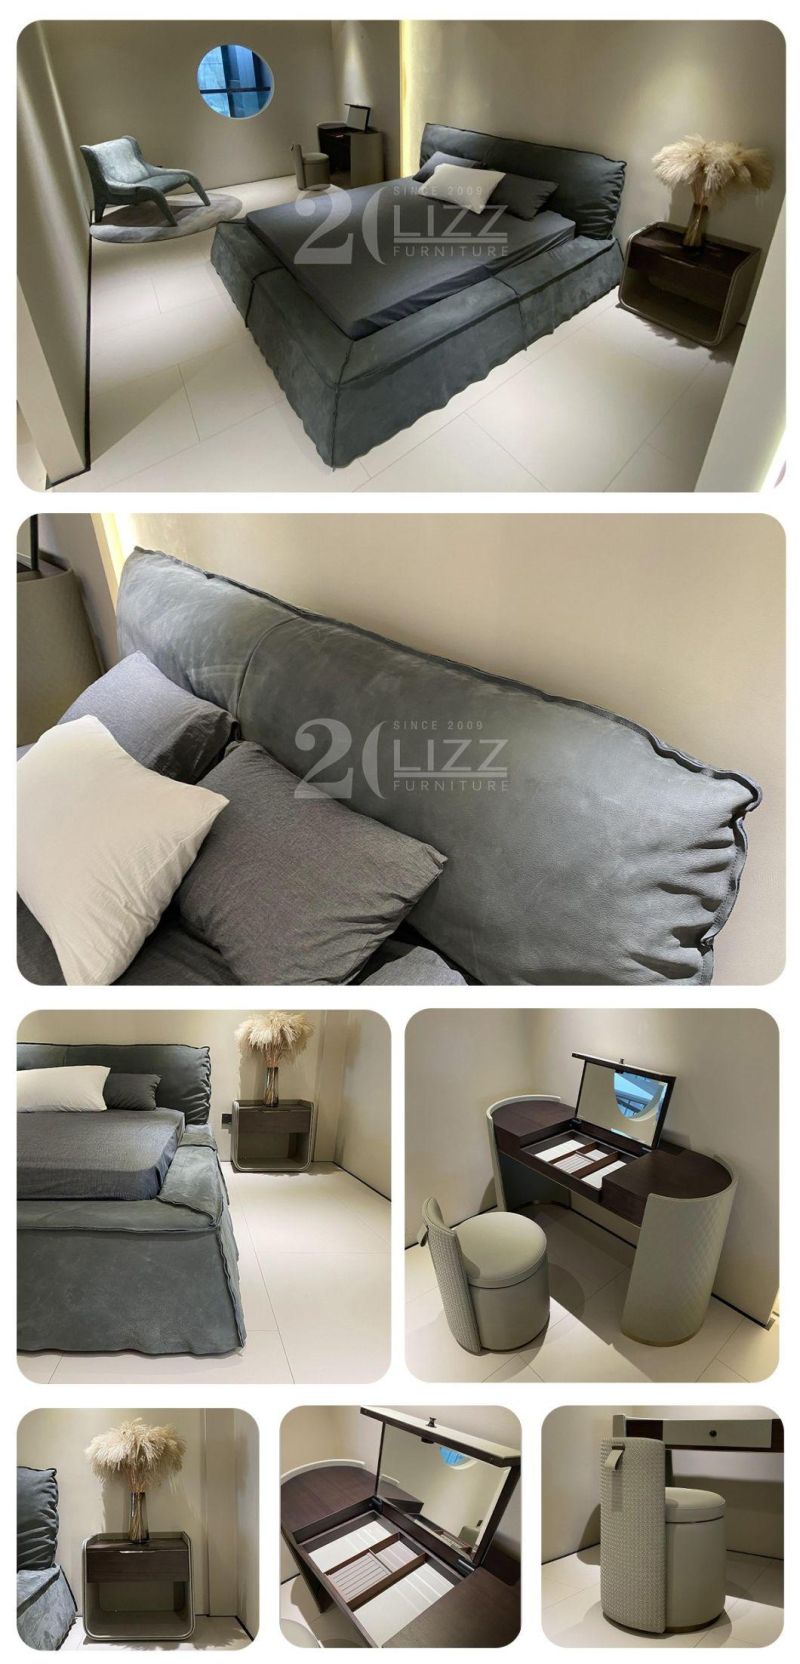 European Modern Design Home Bedroom Furniture Set Geniue Nubuck Leather Bed with Drawers